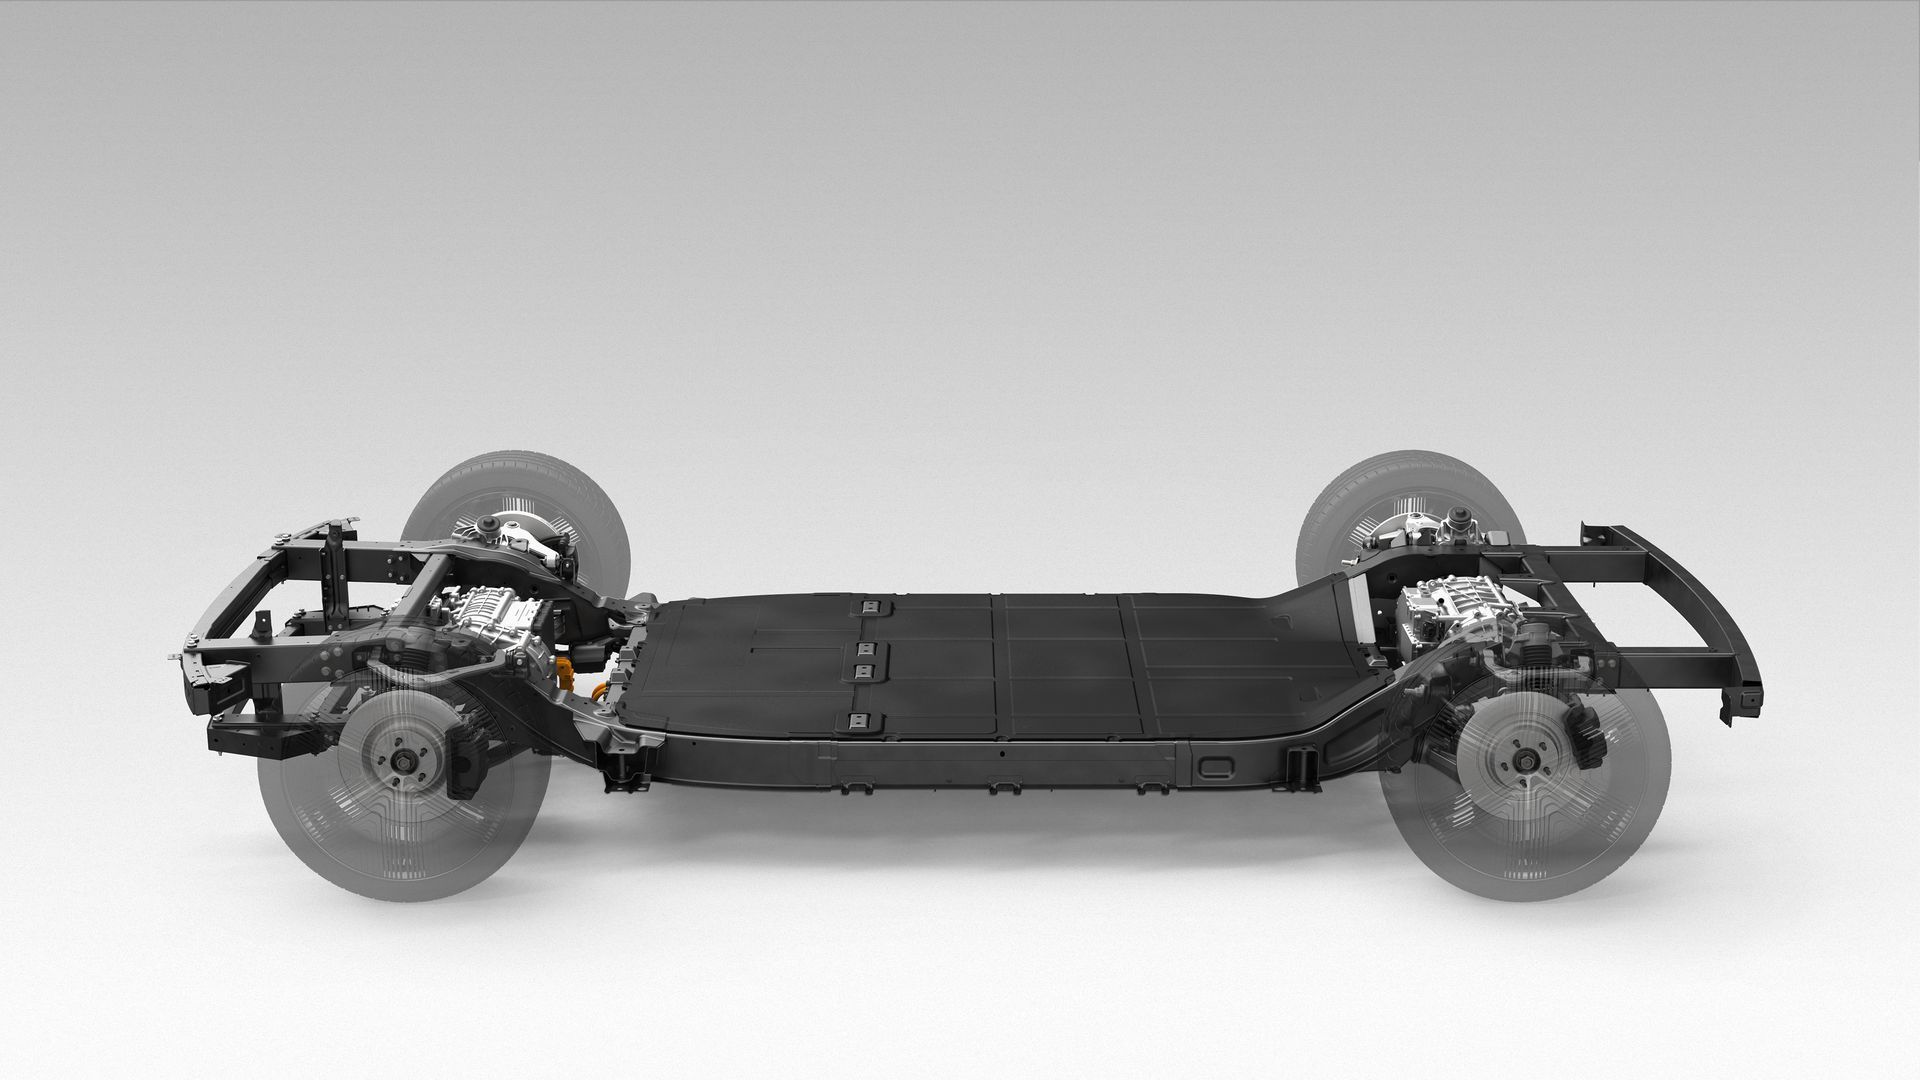 Canoo's electric skateboard will be the basis for future Hyundai and Kia vehicles. Photo: Courtesy of Canoo